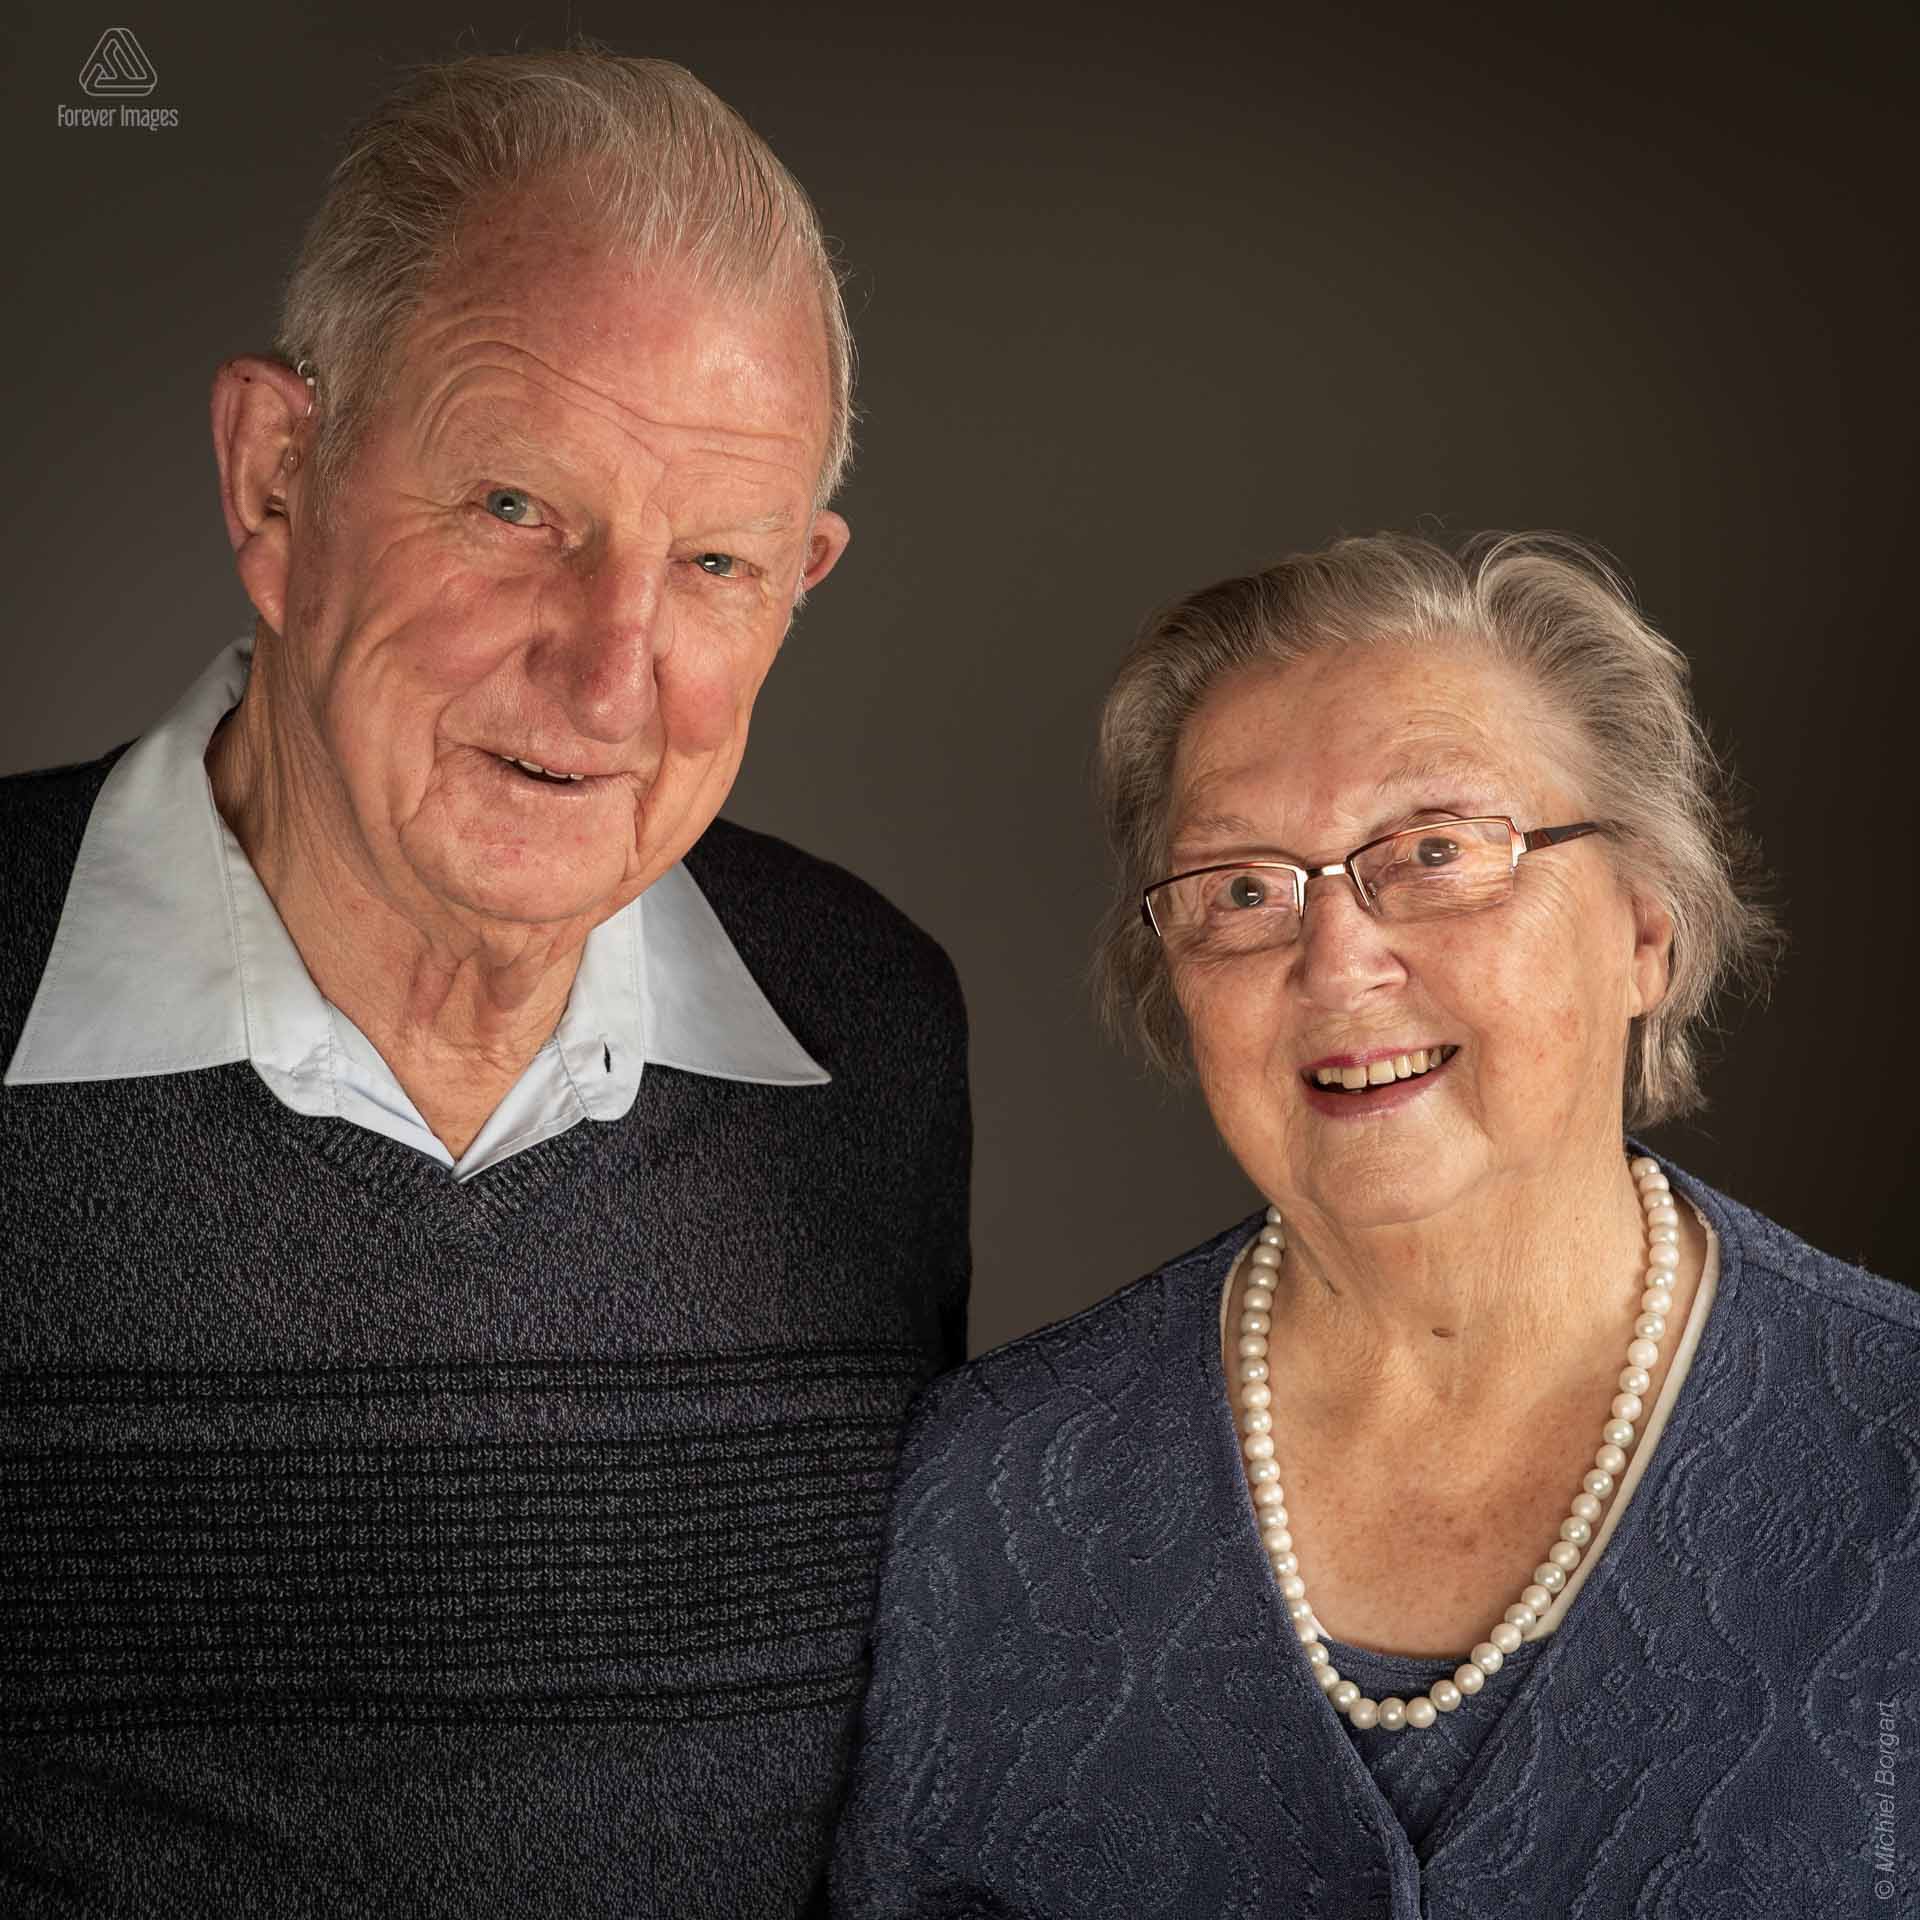 Portrait photo couple smiling together | Echtpaar Rakers | Portrait Photographer Michiel Borgart - Forever Images.